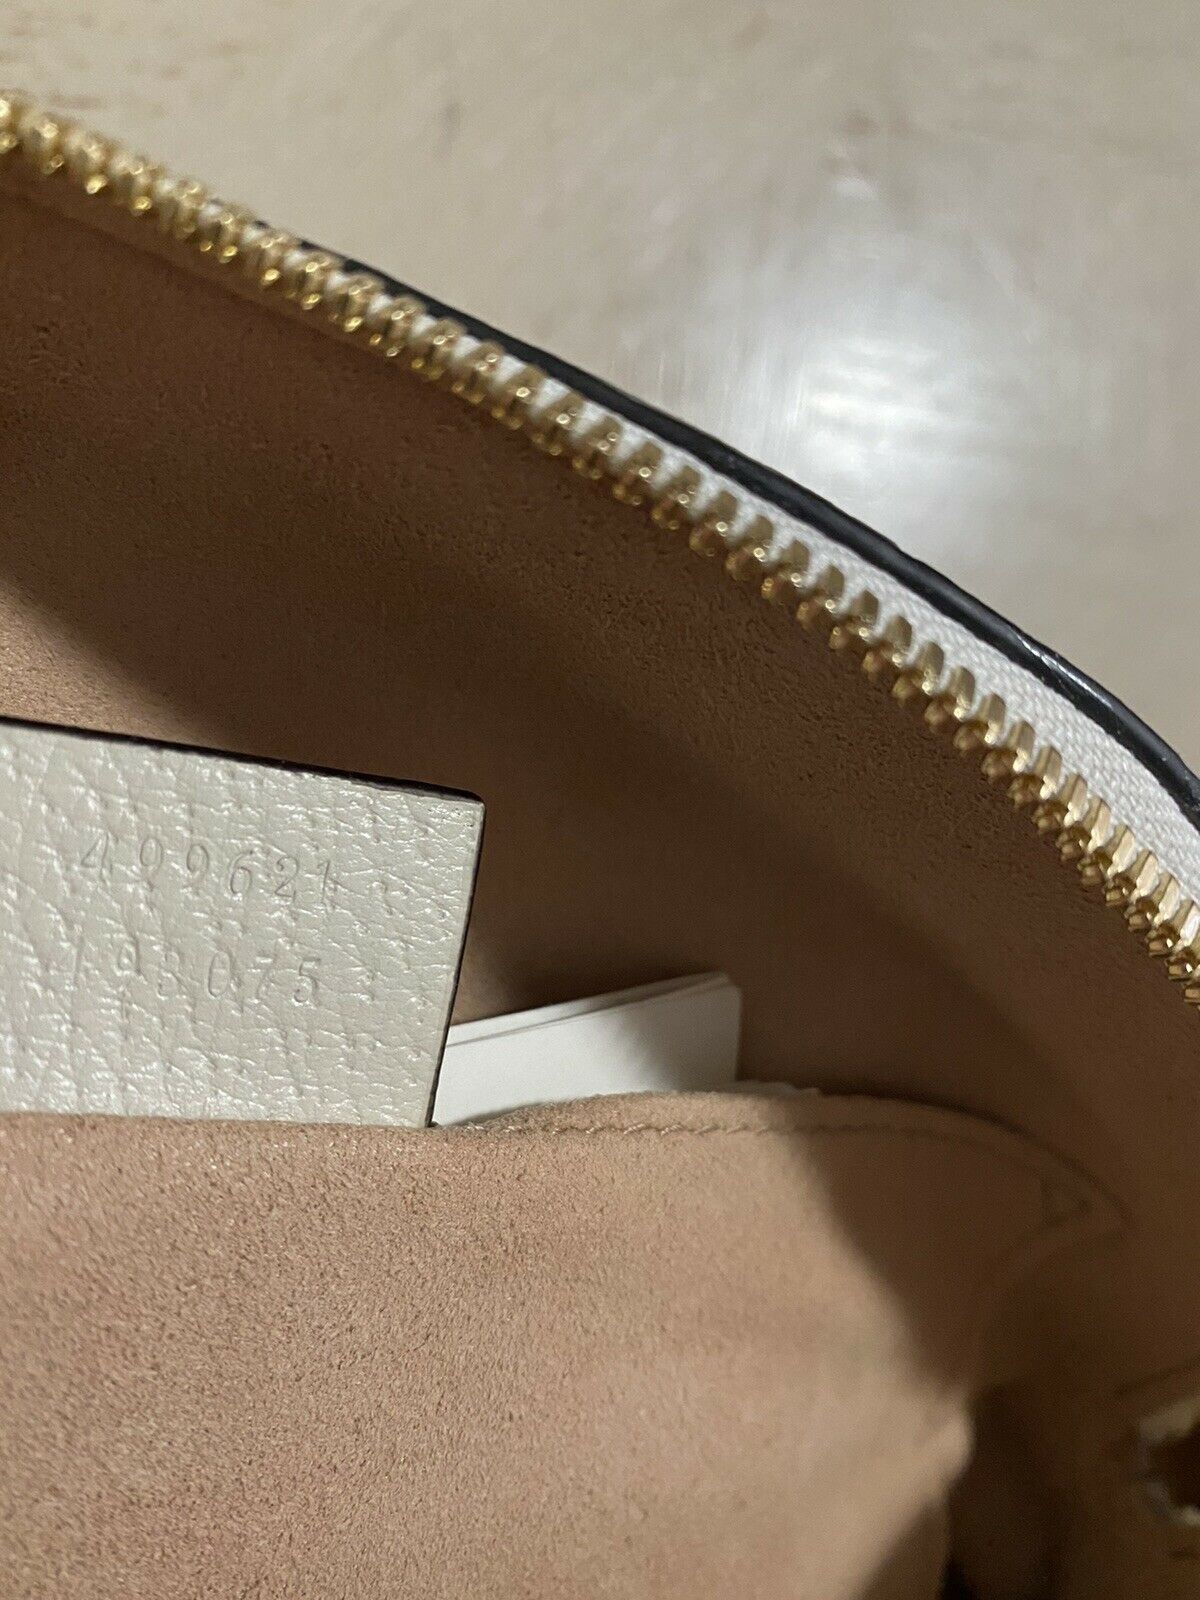 New Gucci Ophidia GG Flora Small Shoulder Bag Multicolor 499621